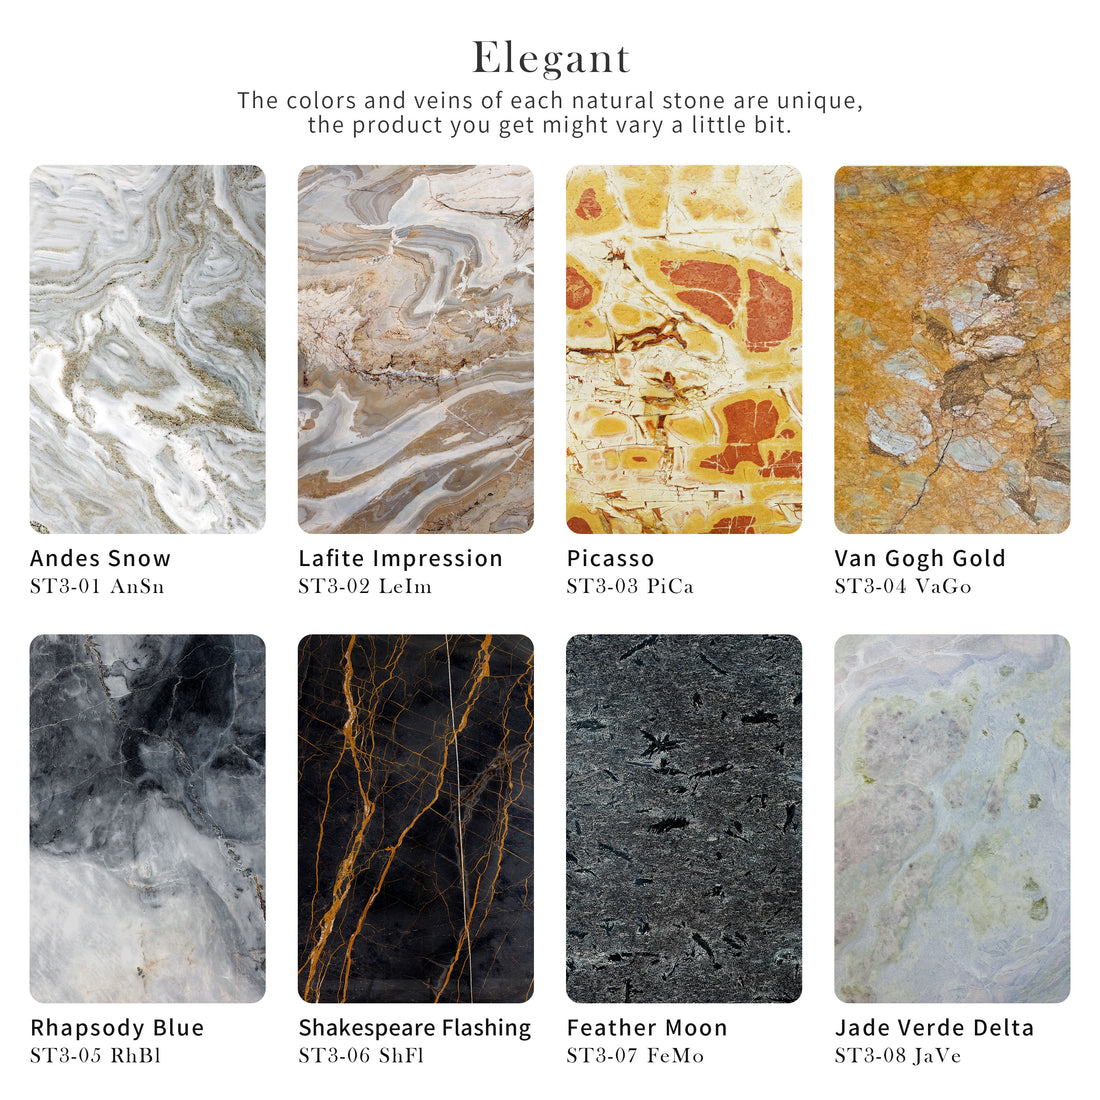 Embracing Elegance: Exploring the Enchanting Marble of the Elegant Series